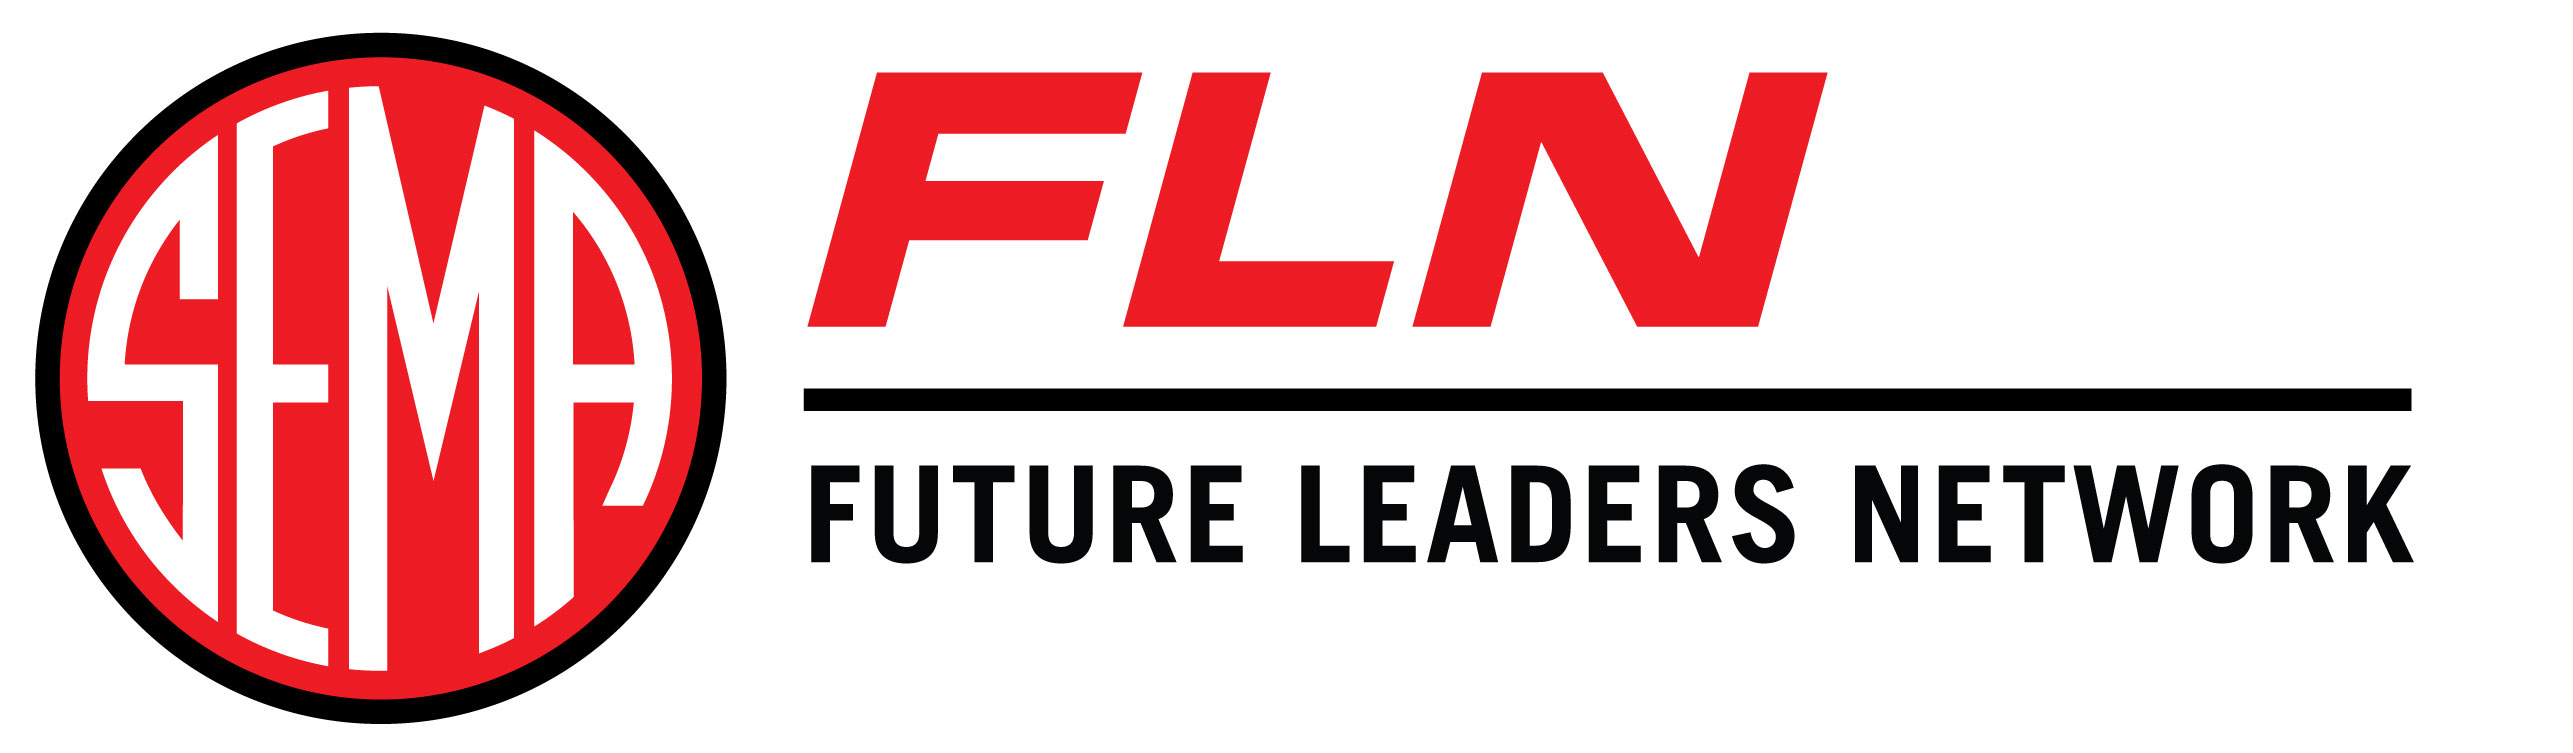 Future Leaders Network - FLN